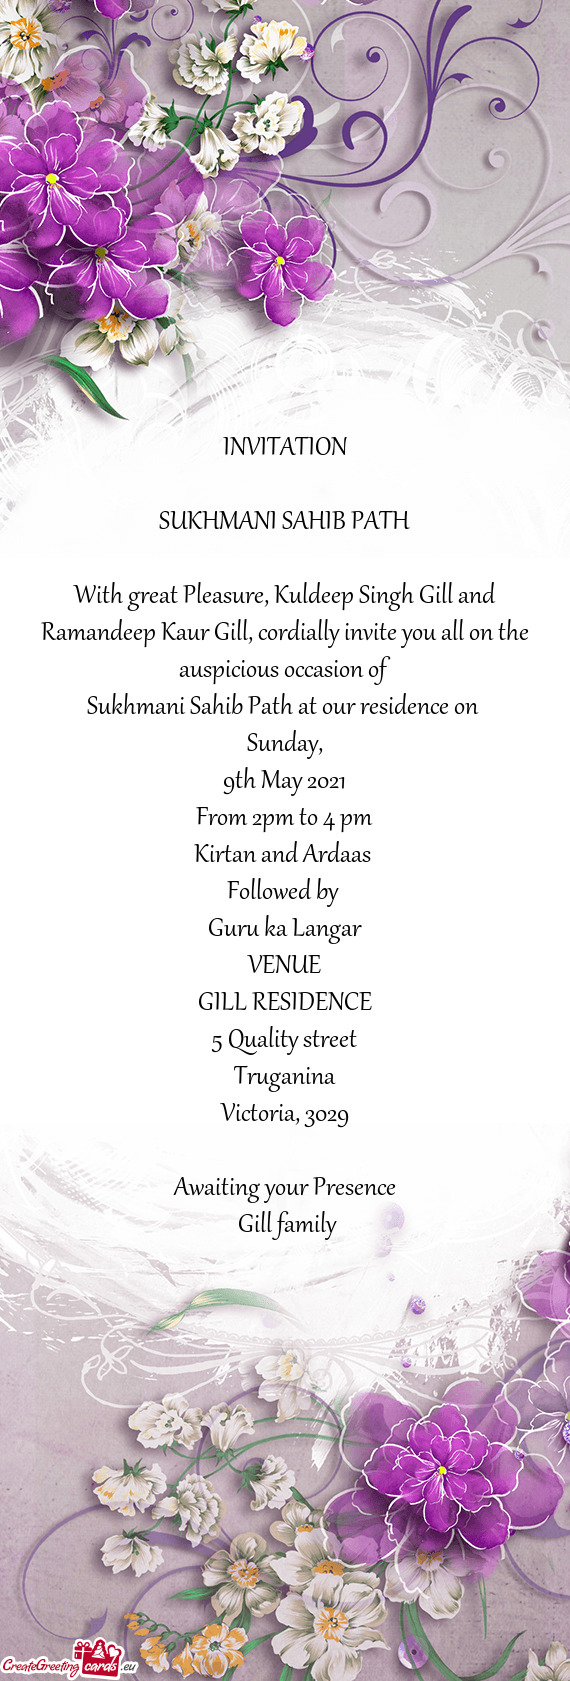 With great Pleasure, Kuldeep Singh Gill and Ramandeep Kaur Gill, cordially invite you all on the aus